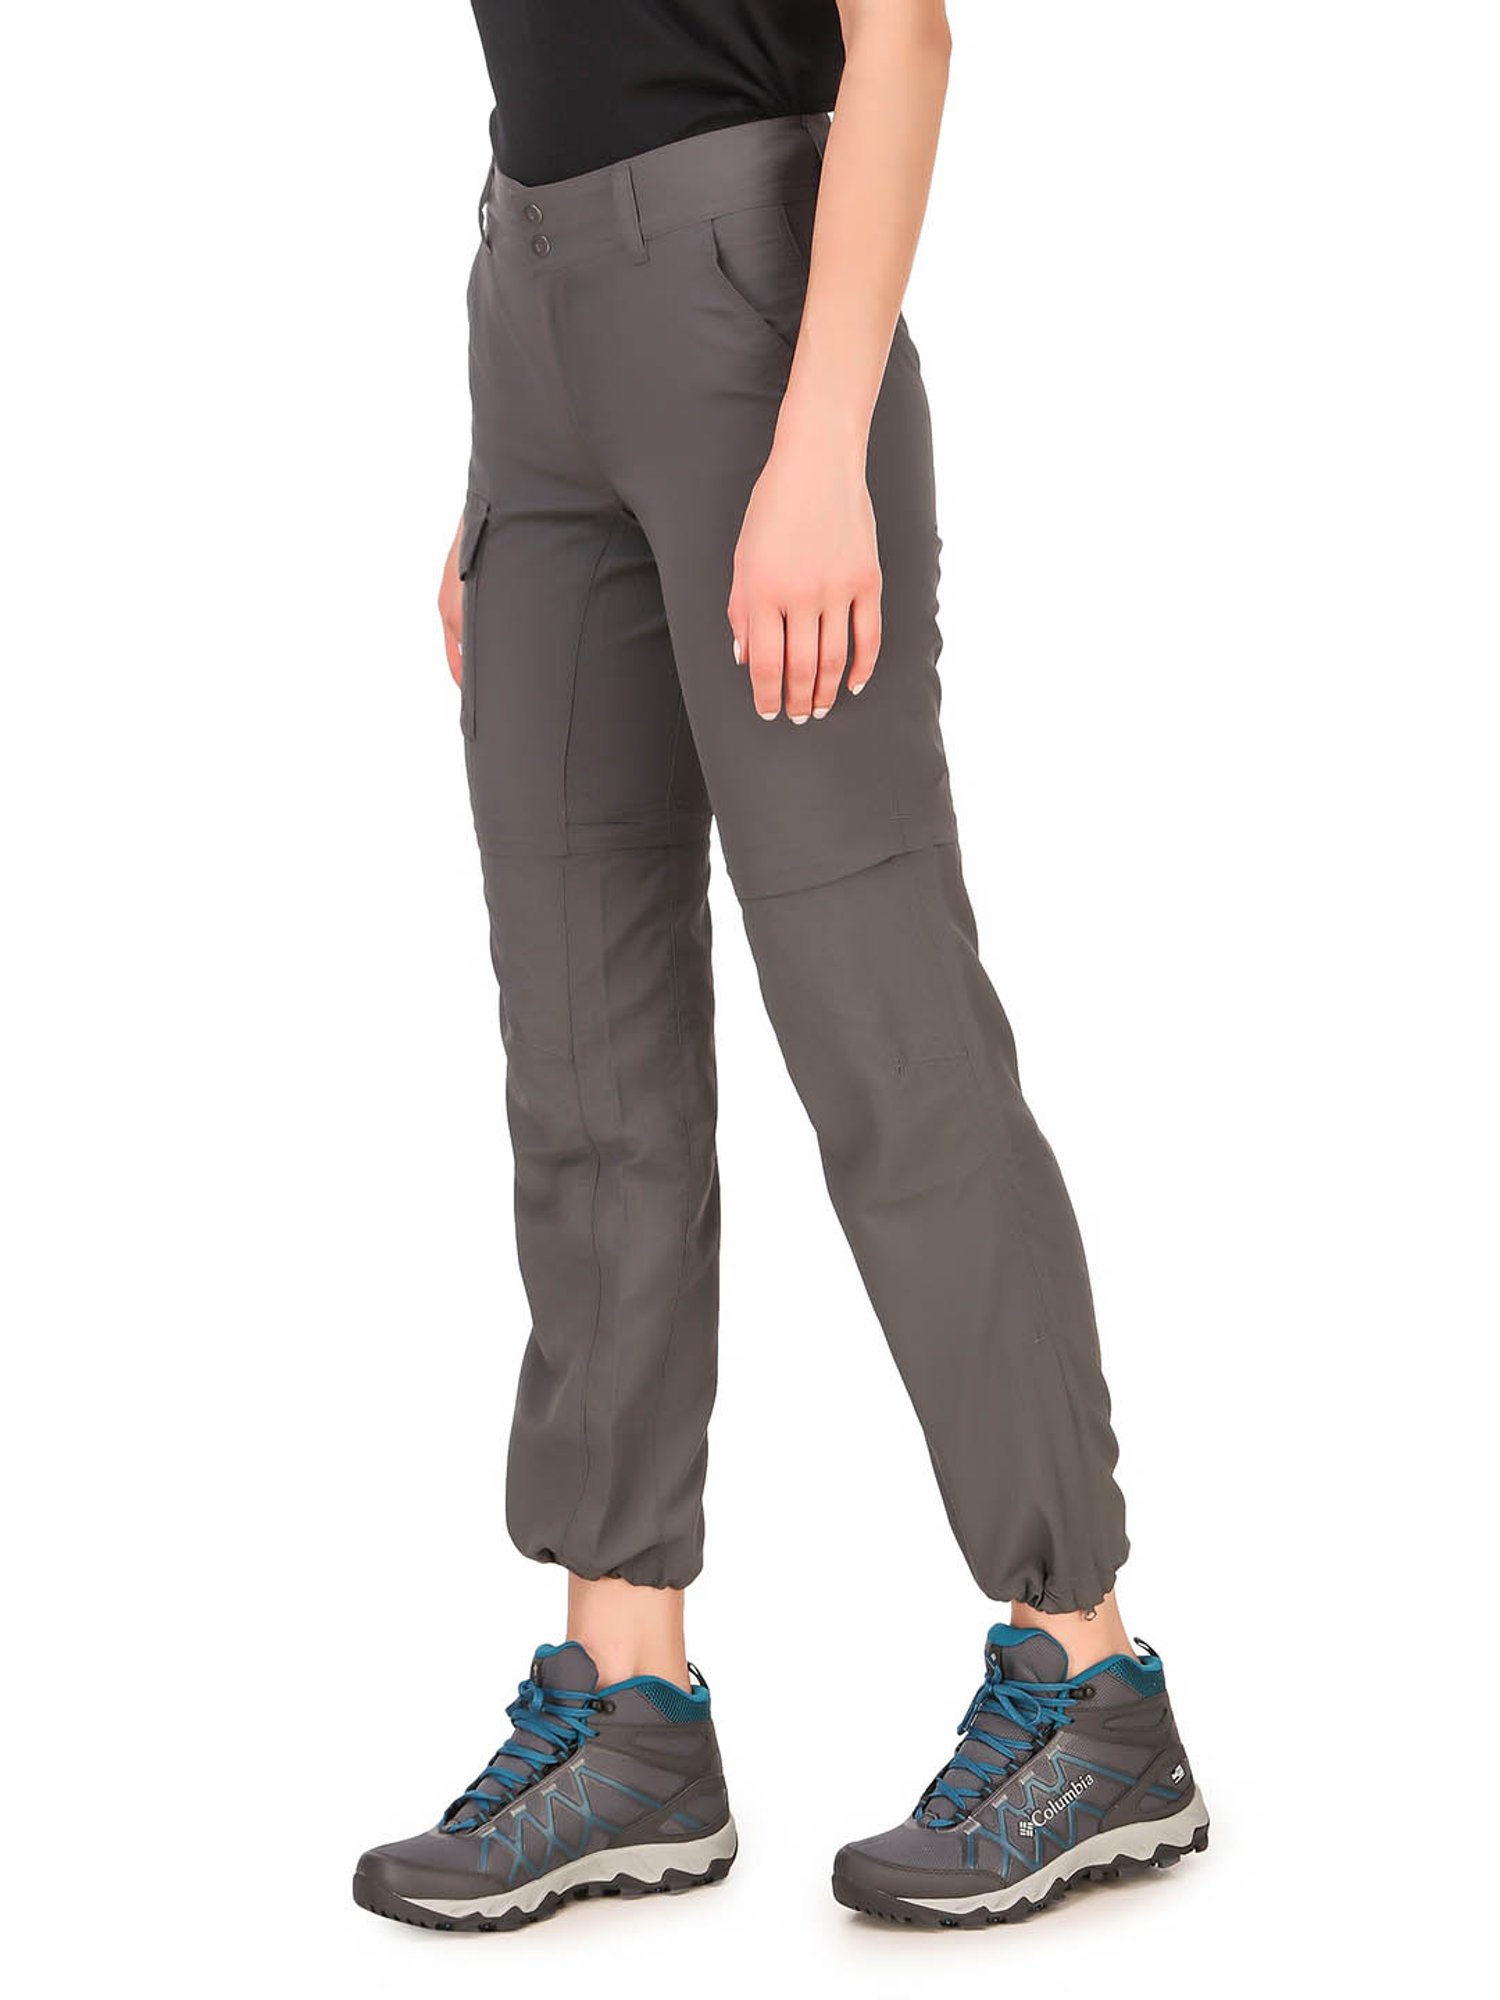 Buy Mens Hiking Stretch Pants Convertible Quick Dry Lightweight Zip Off  Outdoor Travel Safari Pants 818 Khaki 36 at Amazonin